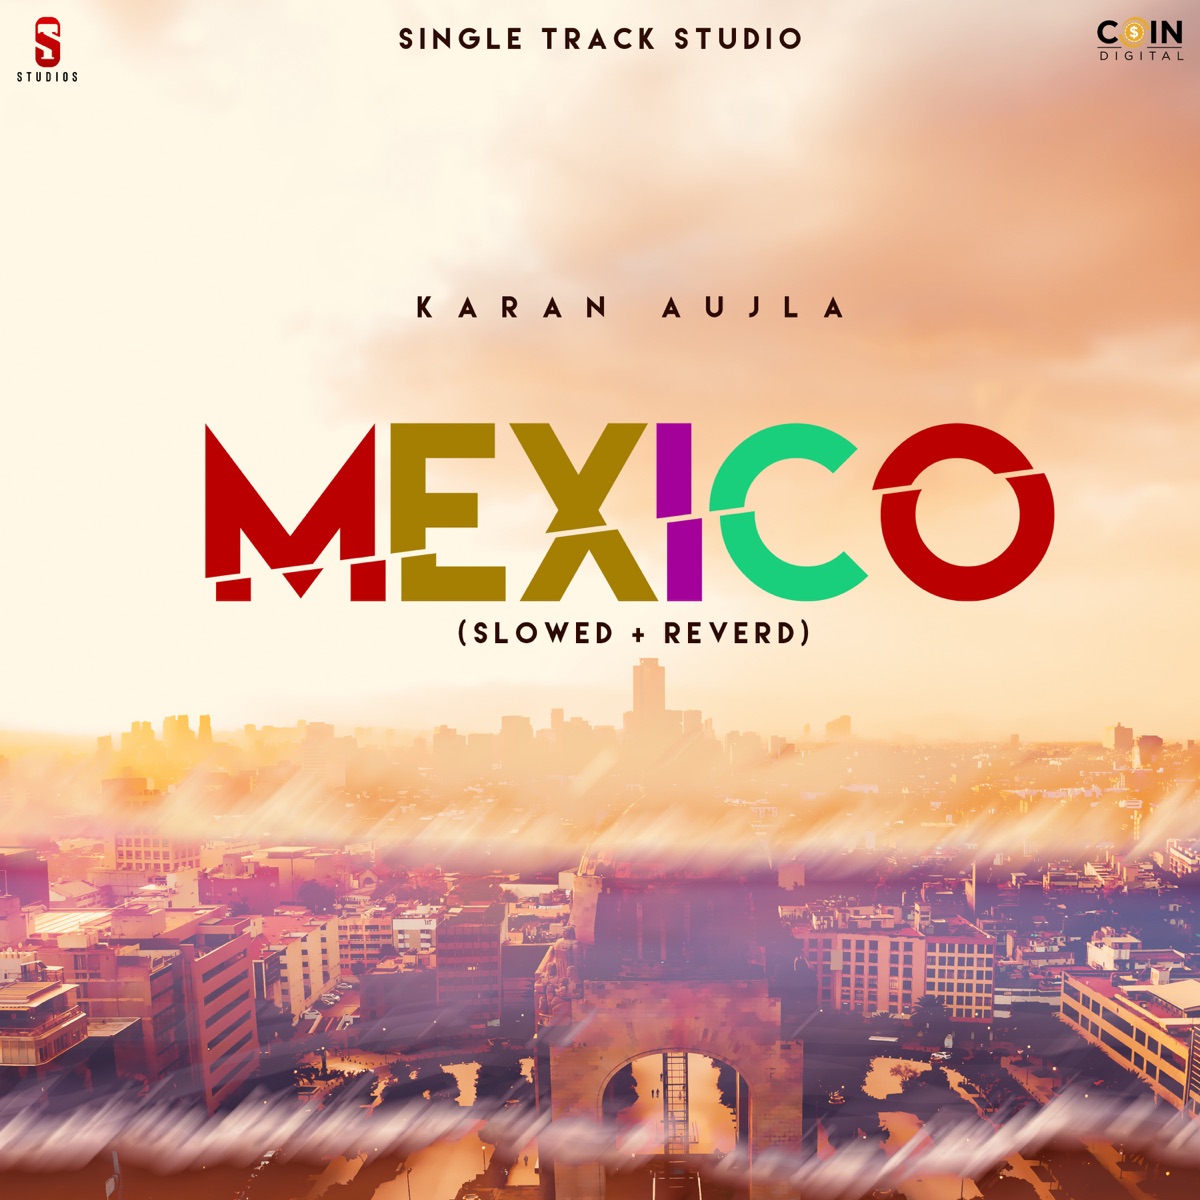 Mexico (Slowed + Reverb) - Single - Album by Karan Aujla - Apple Music